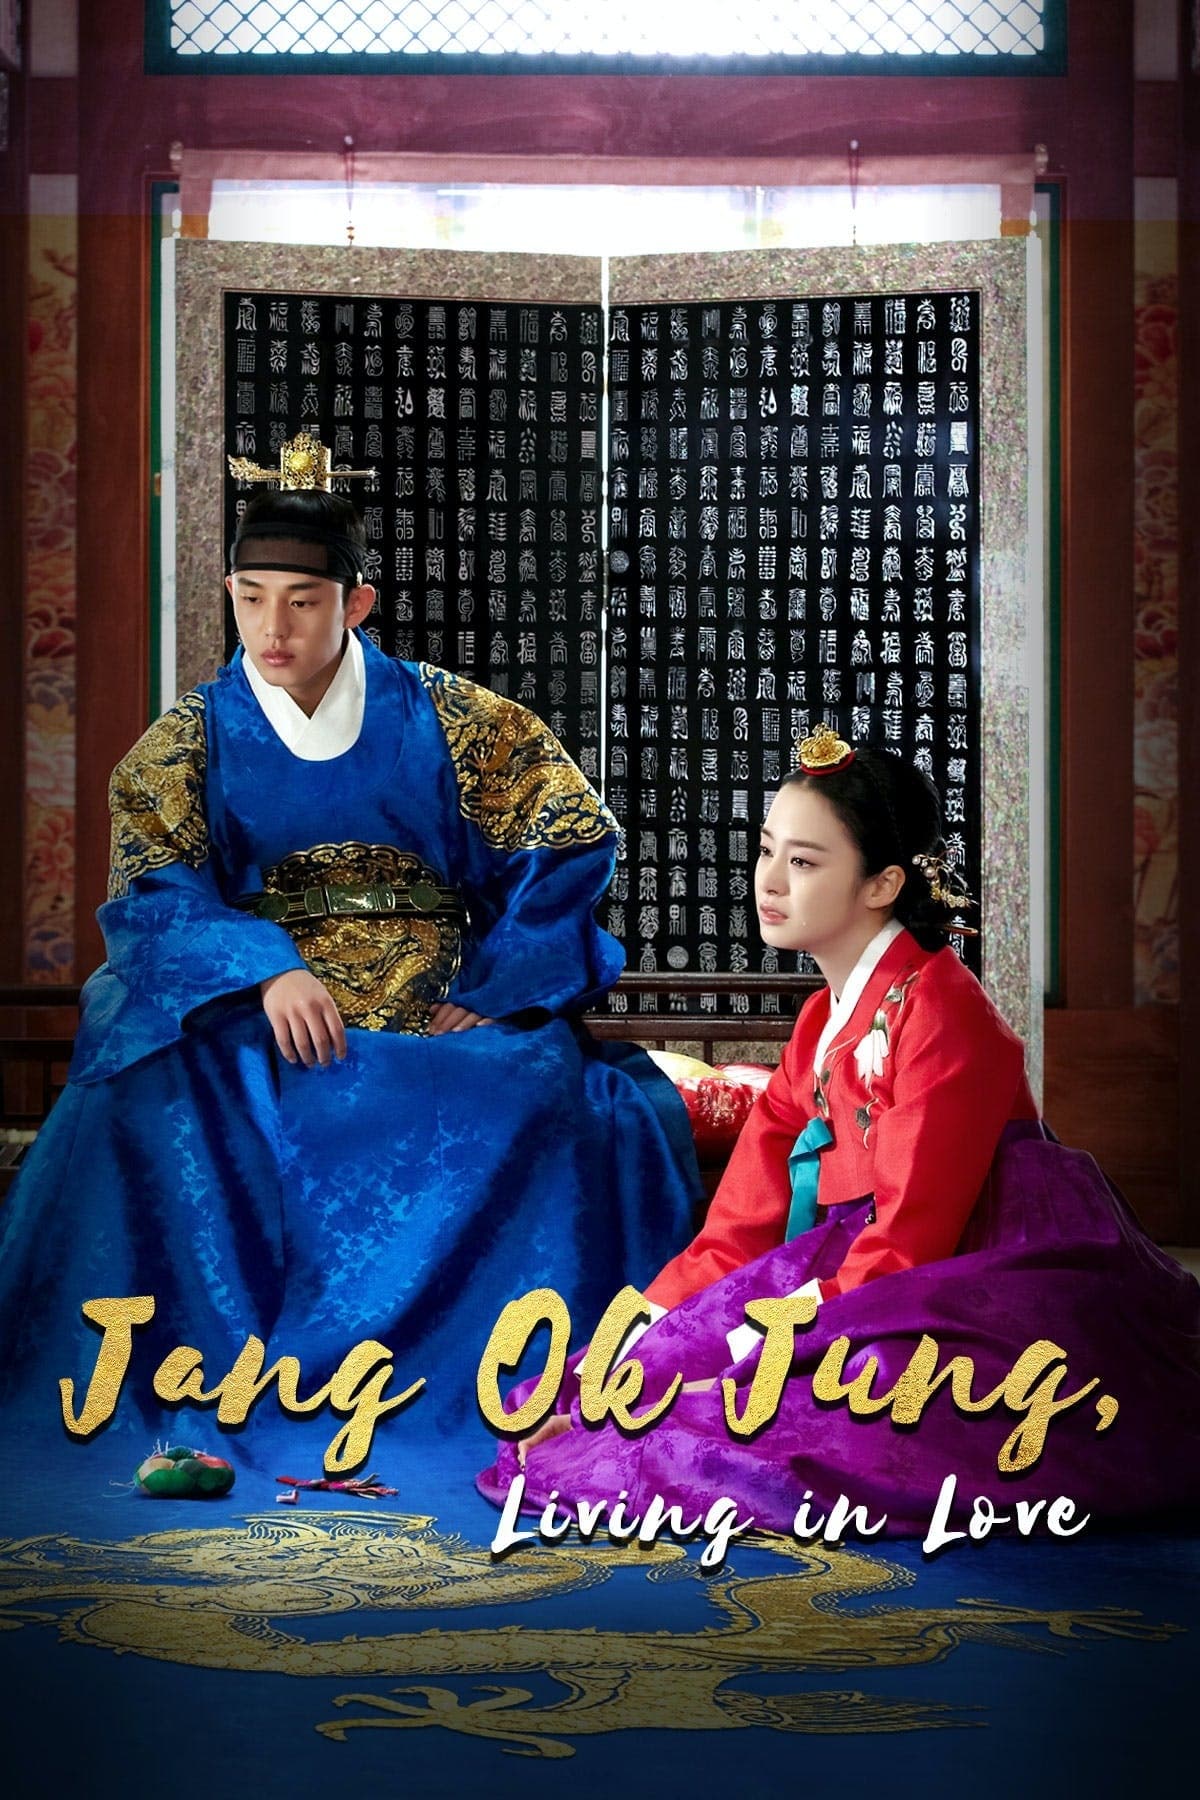 جانگ اوک جونگ، زندگی برای عشق (Jang Ok jung Living by Love)